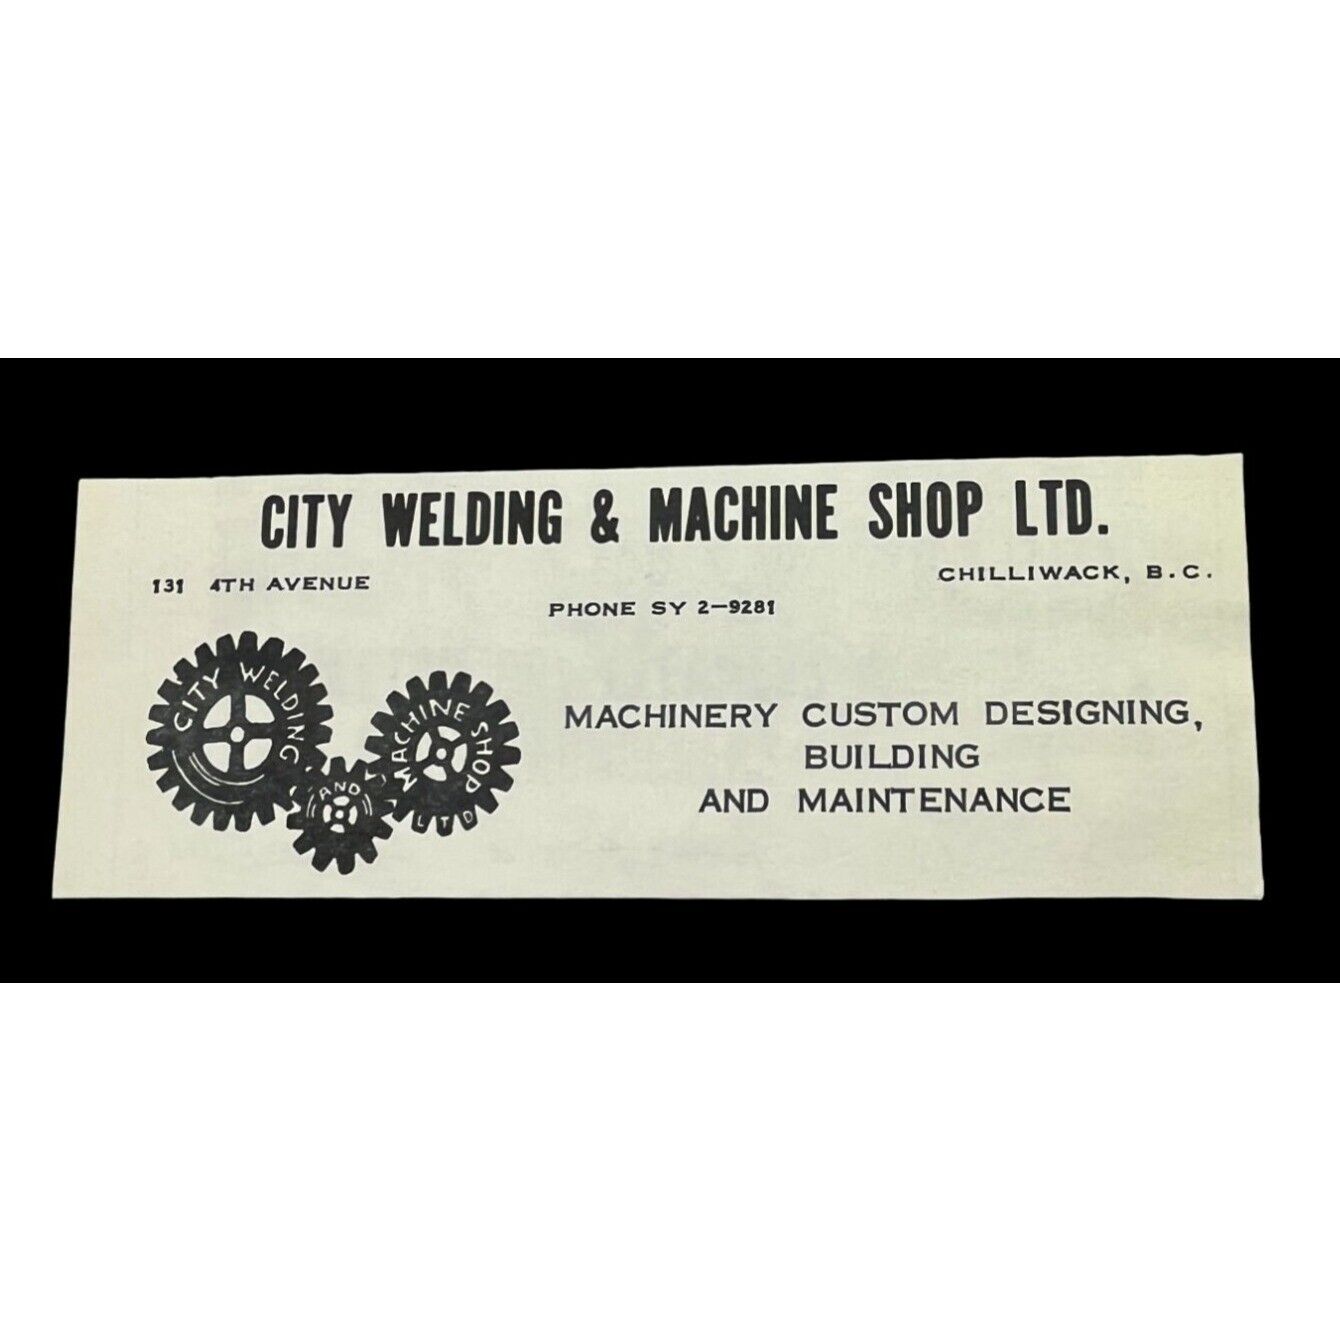 City Welding and Machine Shop Ltd Vintage Print Ad Chilliwack B.C. Gears 1950s